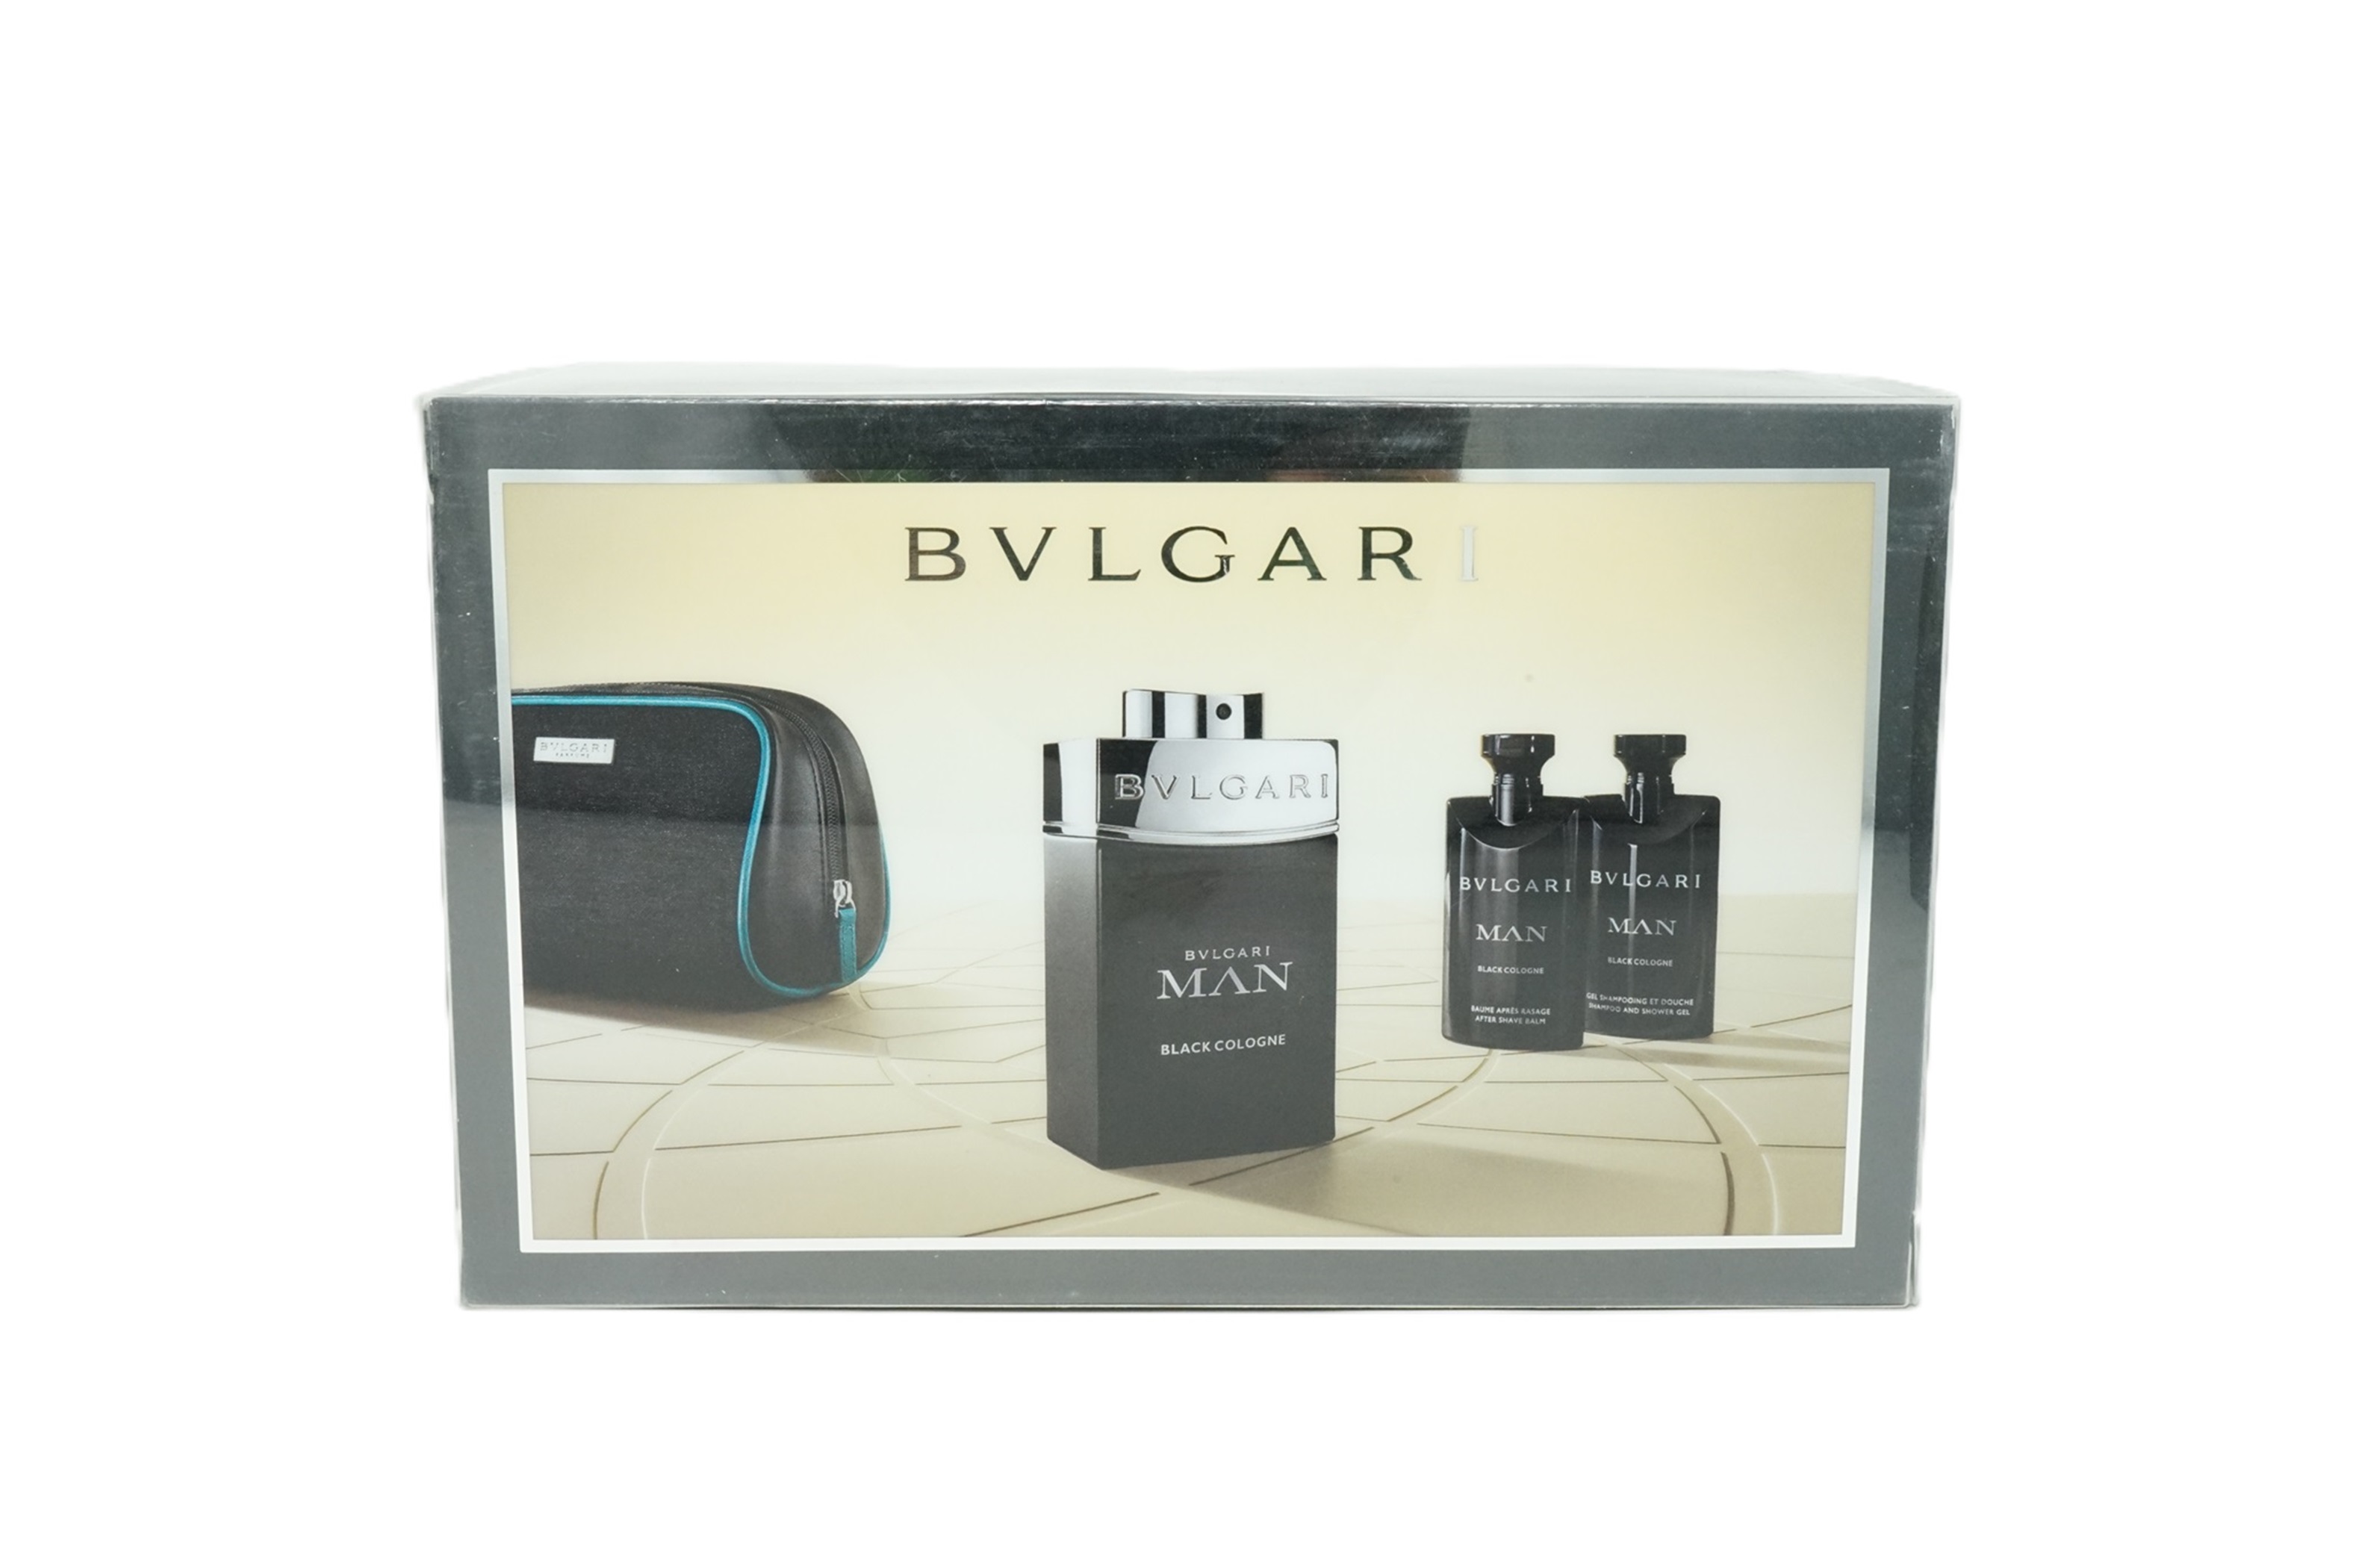 BVLGARI Man Black Cologne Eau de Toilette Spray 100ml + Shower Gel 75ml + After Shave Balm 75ml